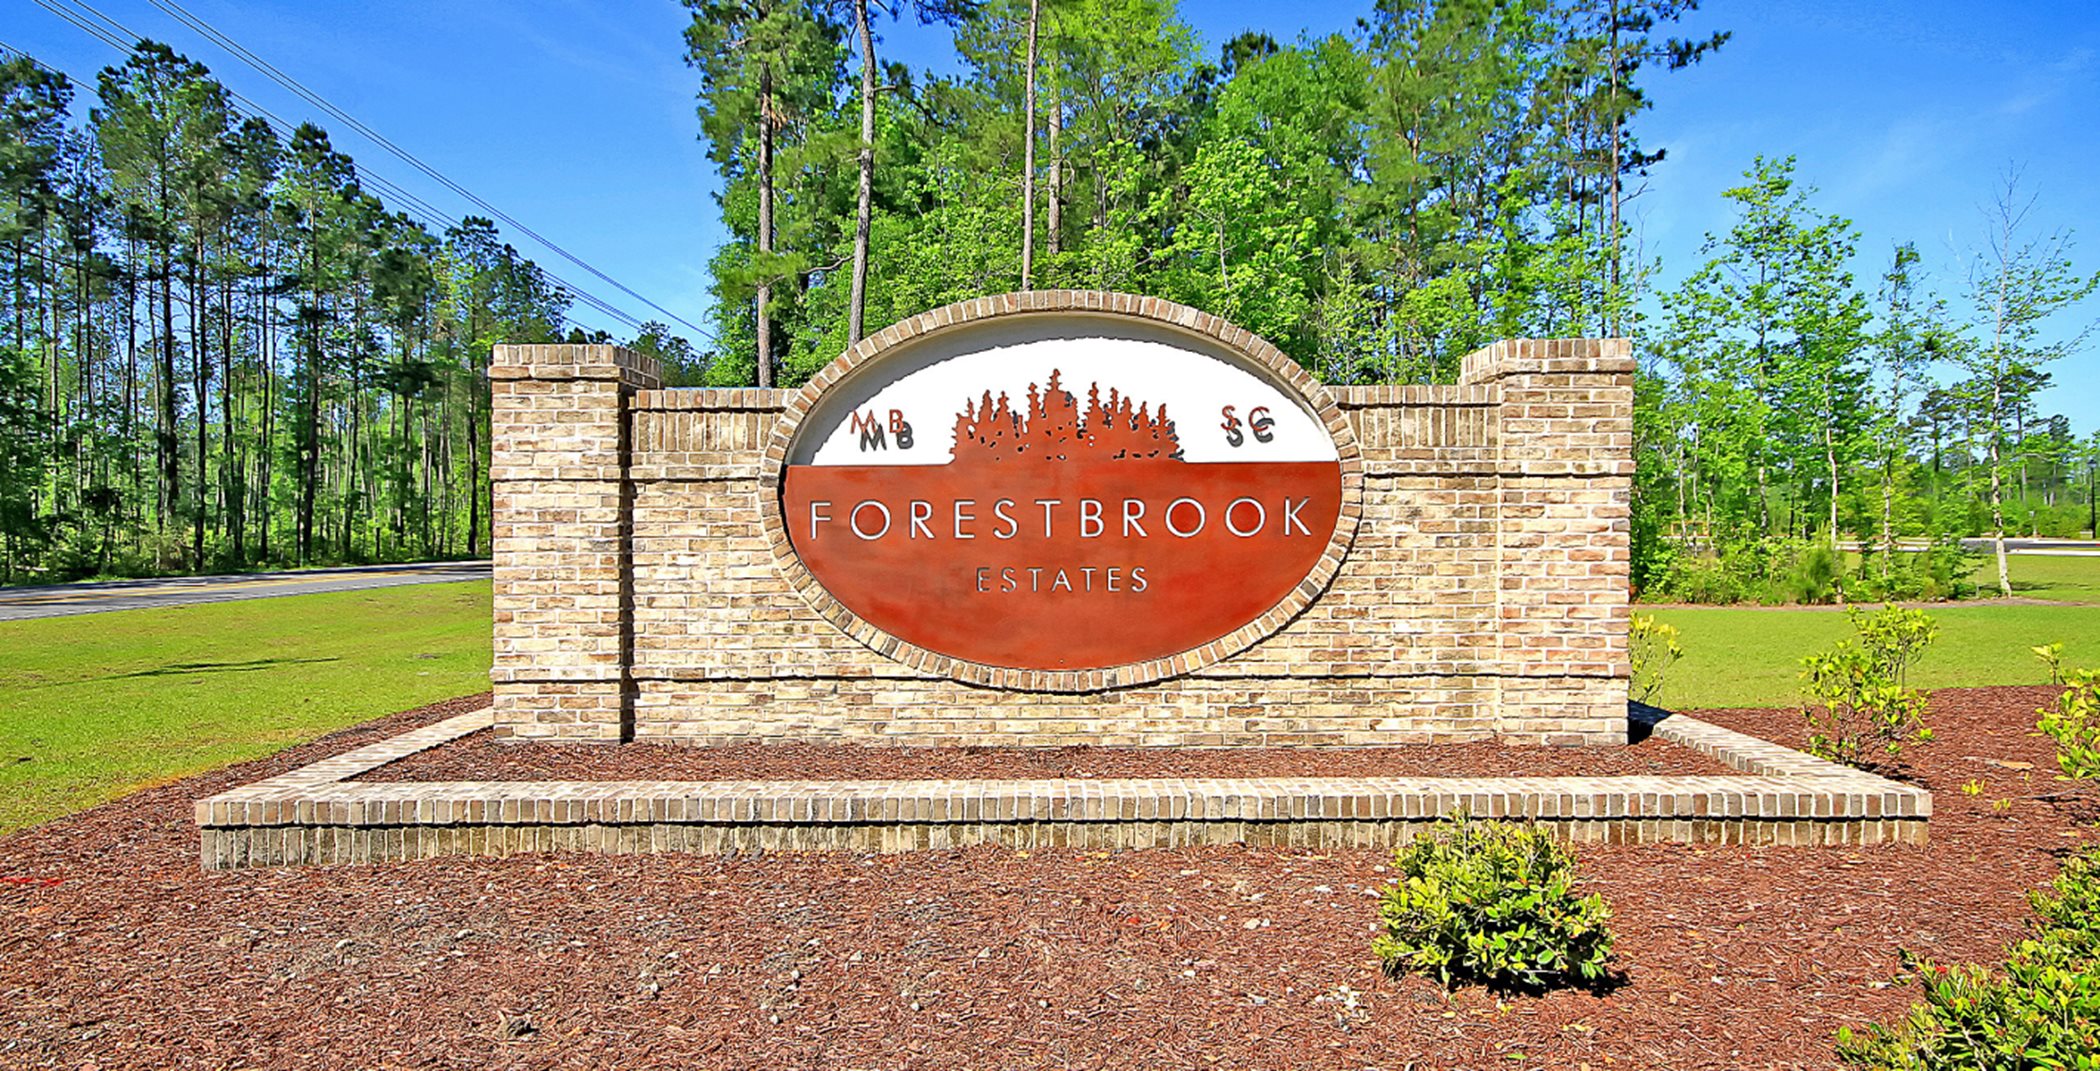 Forestbrook Estates entry monument